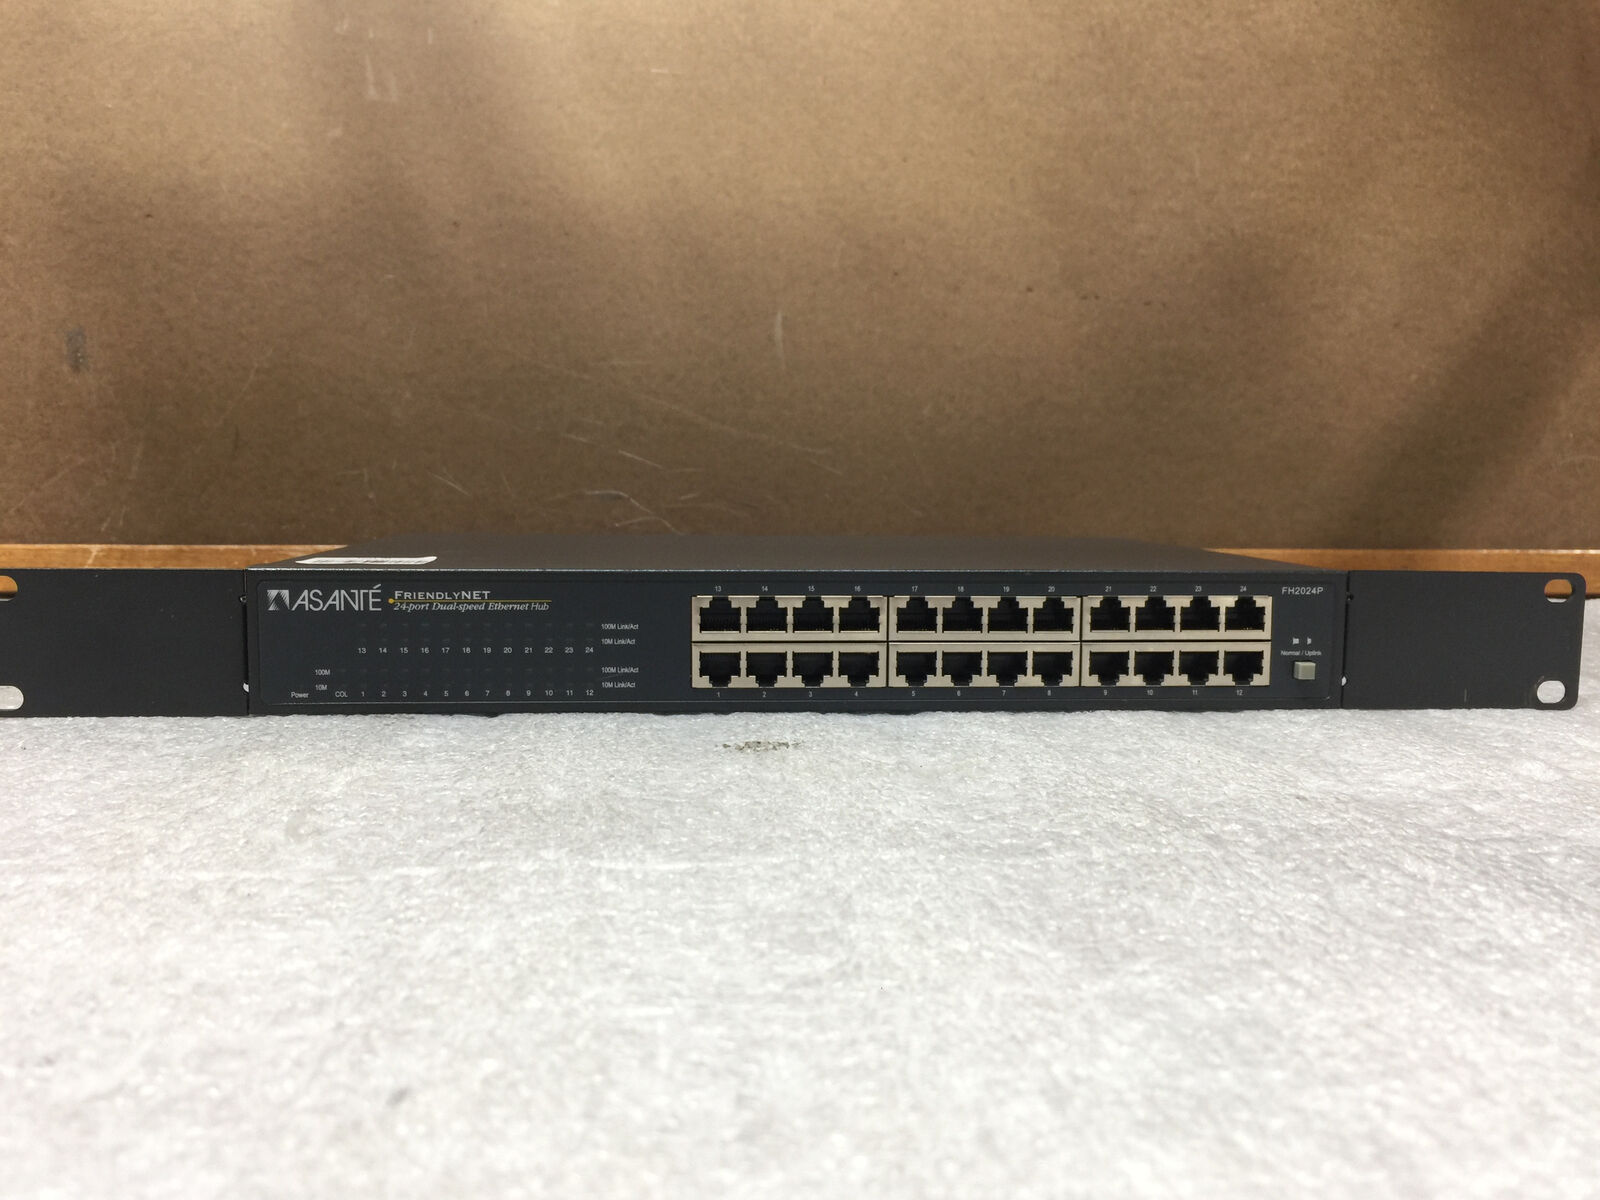 Asante FriendlyNet 24-Port Dual-speed Ethernet Hub Switch, w/ RACK EARS -TESTED